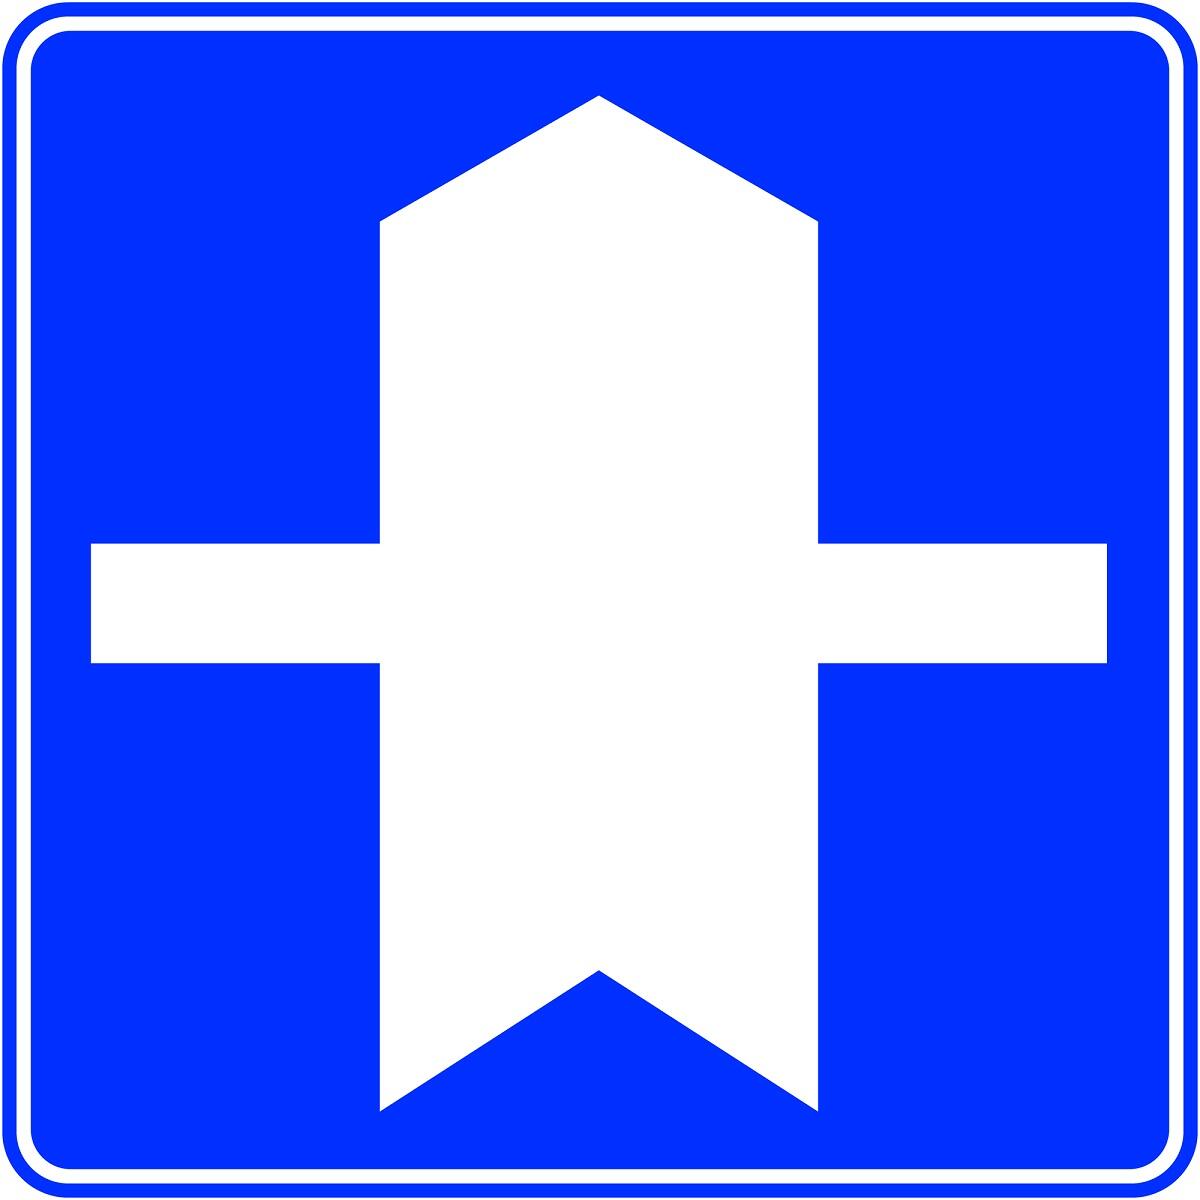 優先道路の標識.jpg